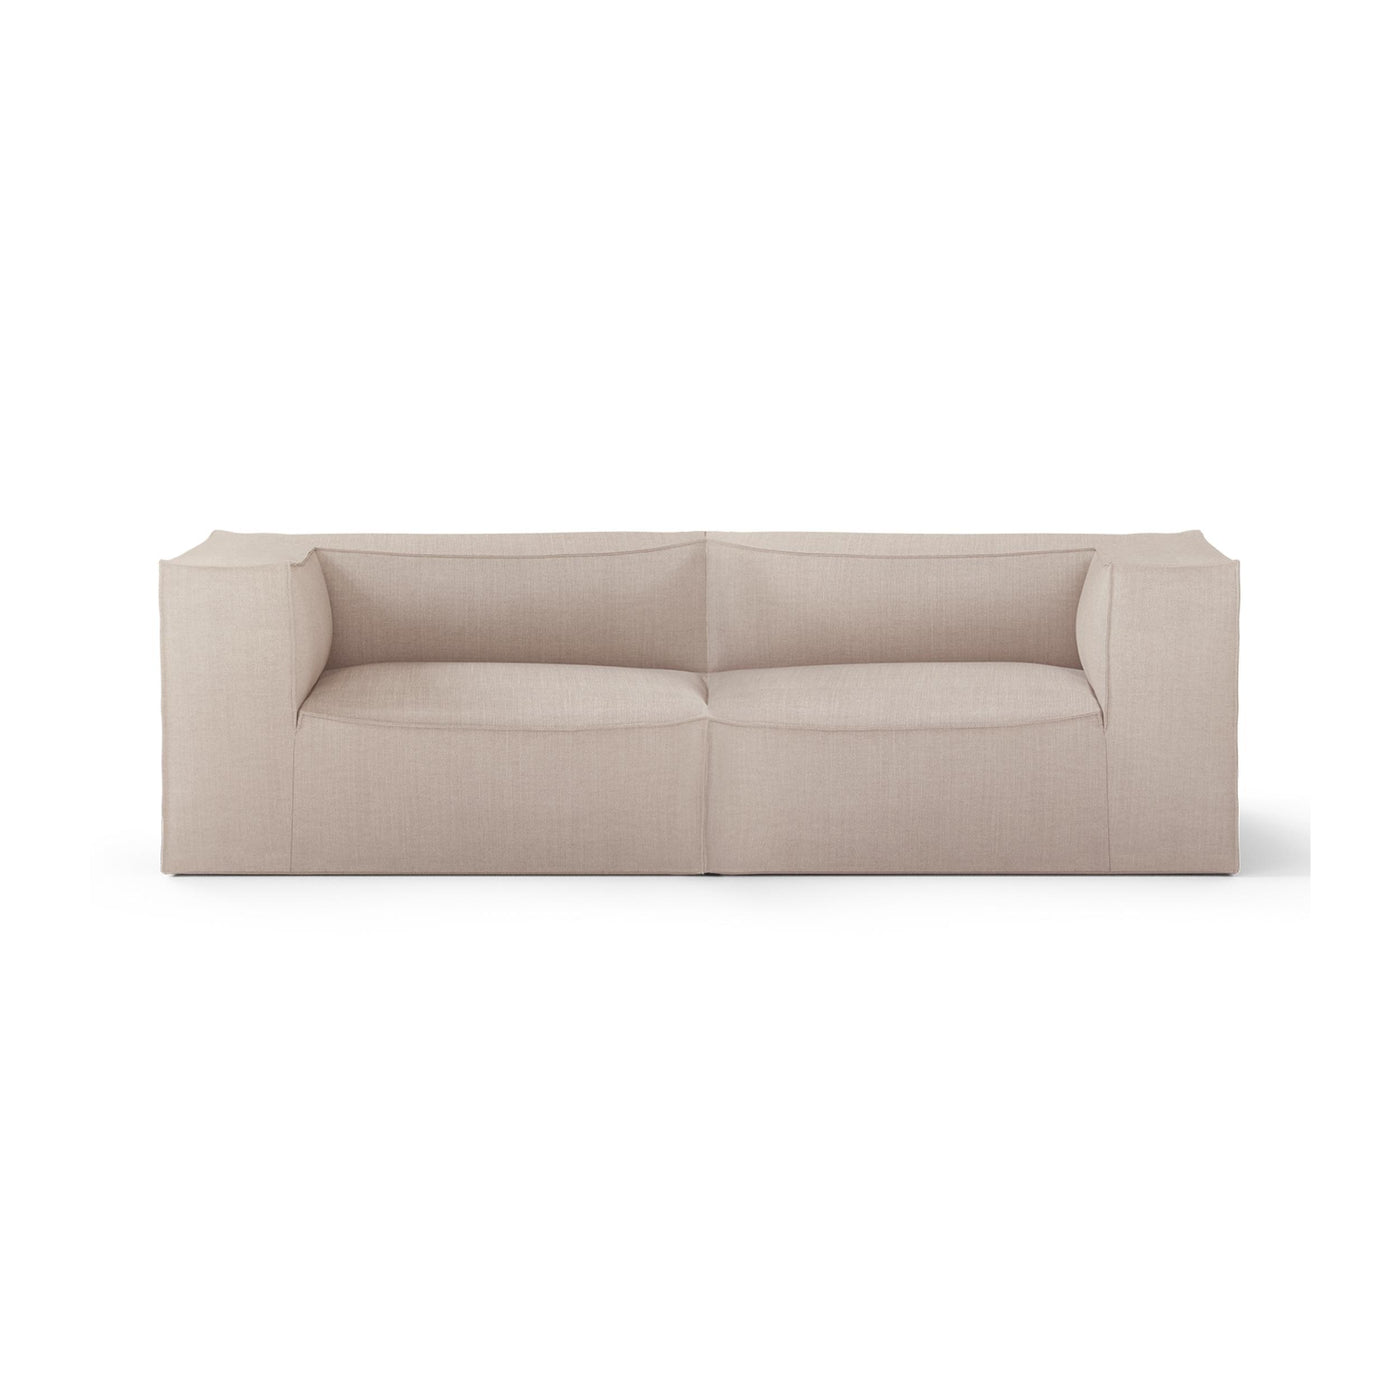 Ferm LIVING Catena Modular 2 Seater sofa. Made to order at someday designs #colour_linara-sand